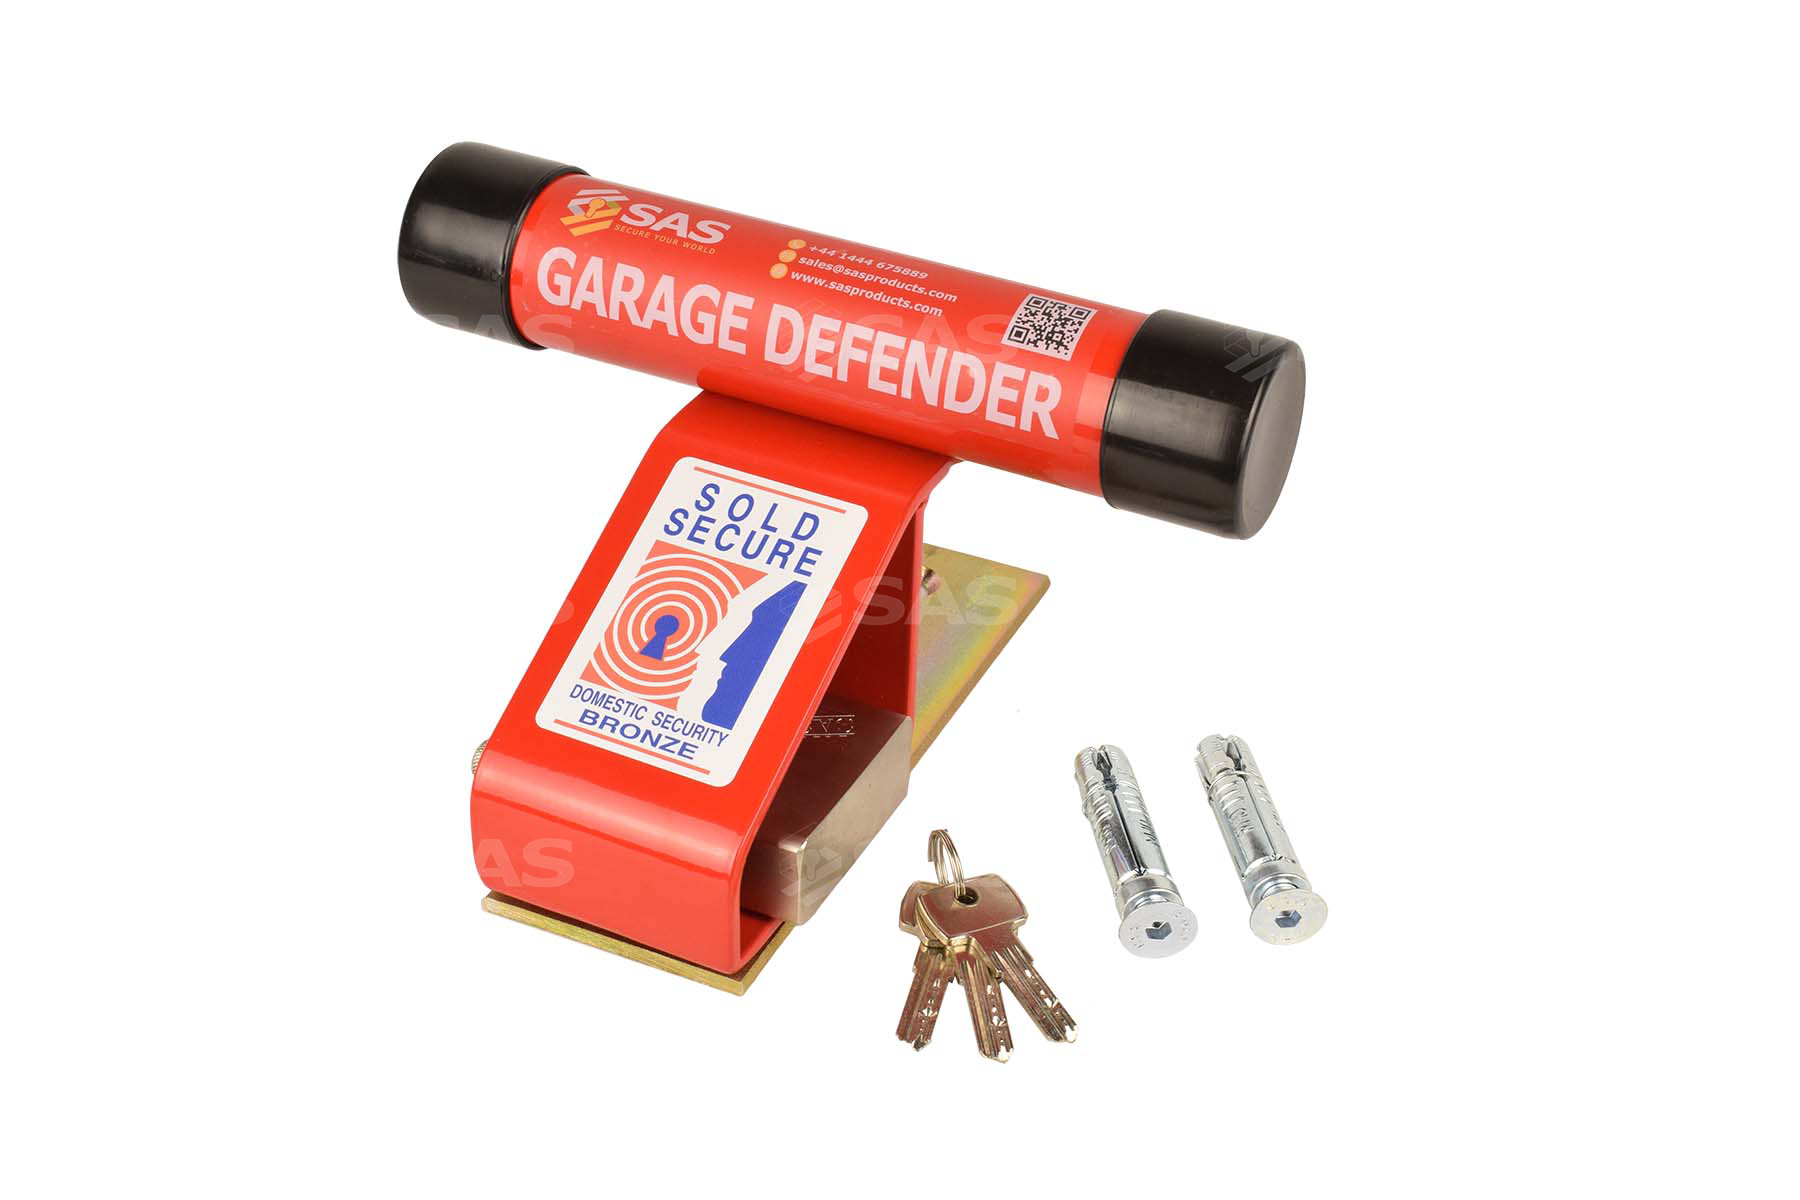 Garage Defender Garage Security Anti Theft Sold Secure 6111875